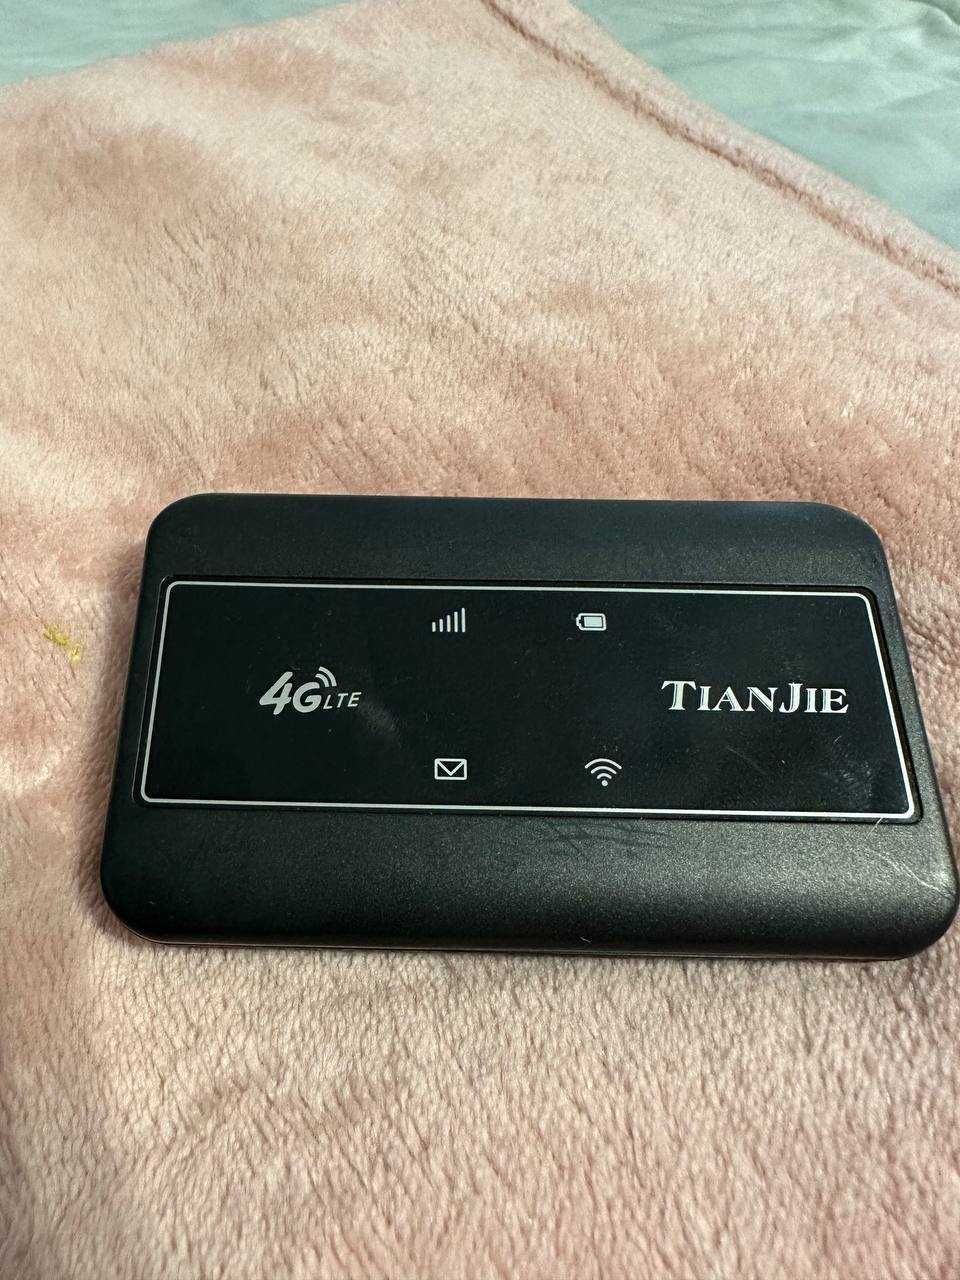 Wi-Fi роутер TianJie 4G lte